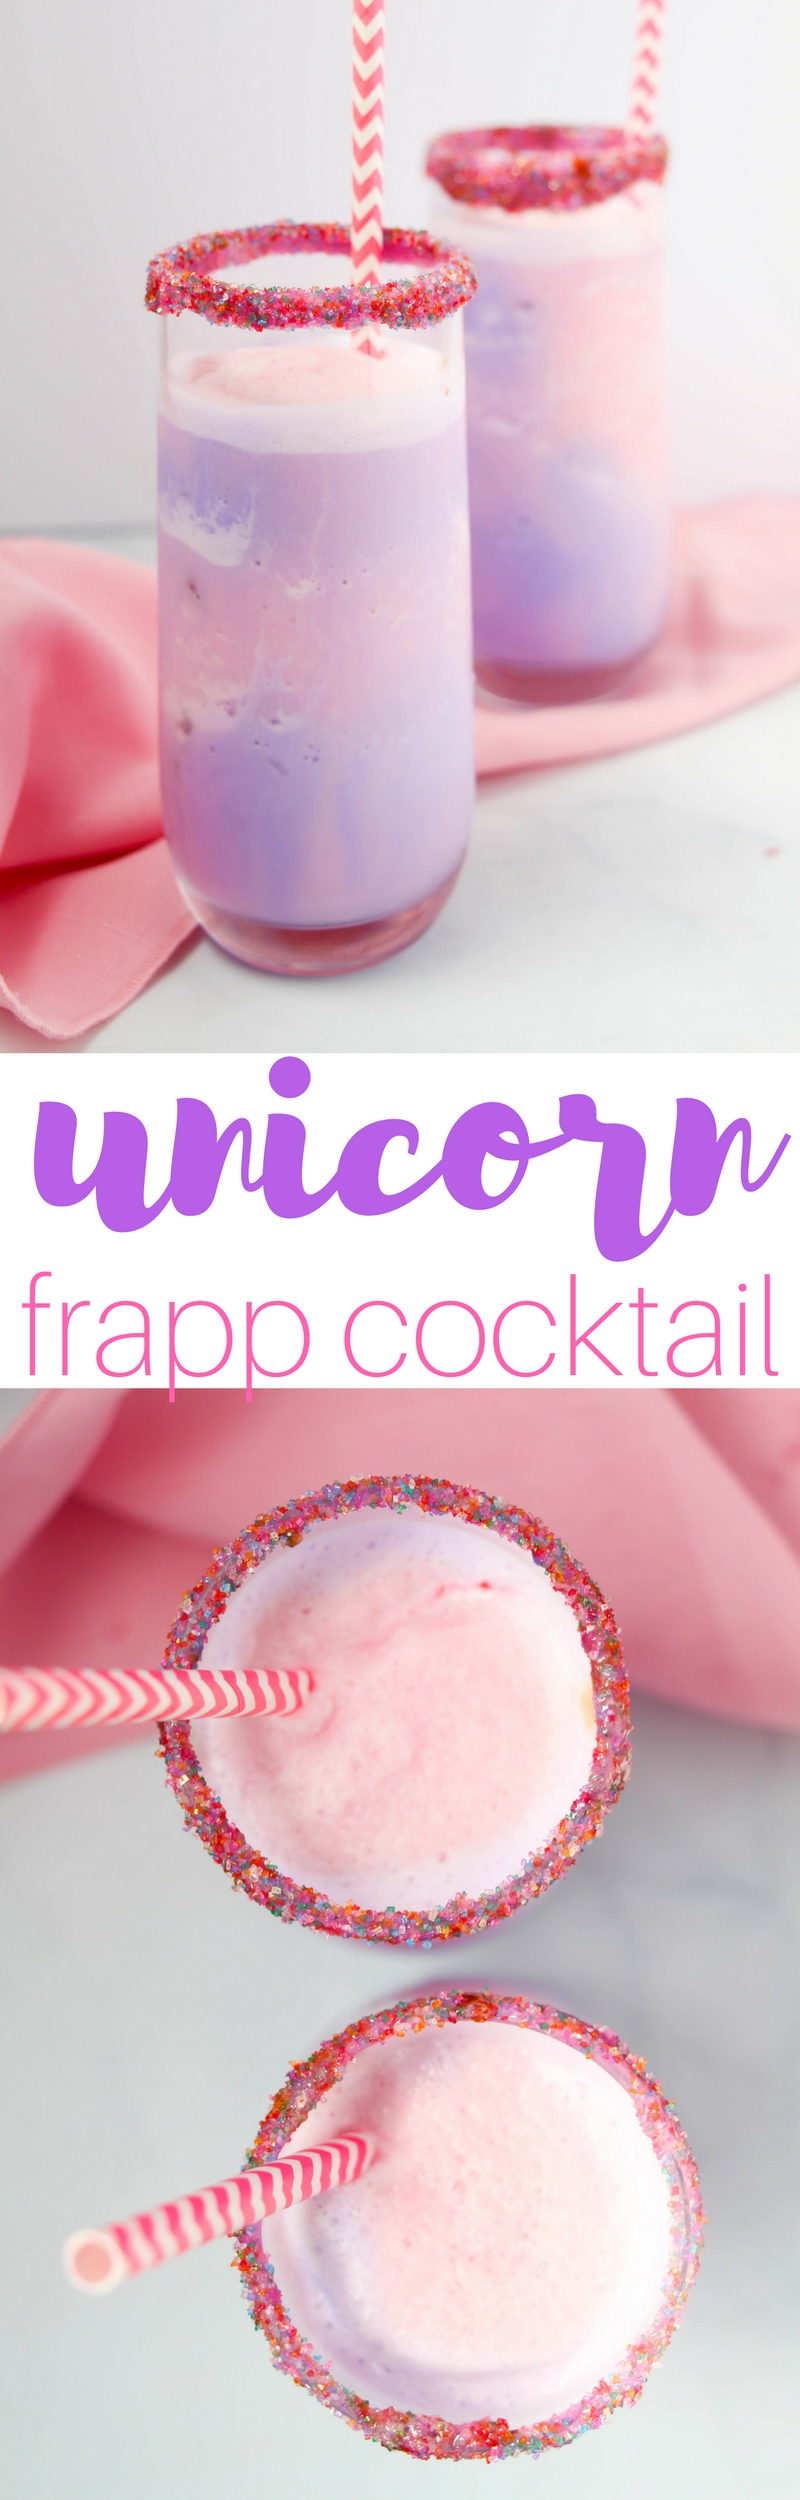 Grown-up Unicorn Frappuccino Recipe by popular blogger Sandy A La Mode